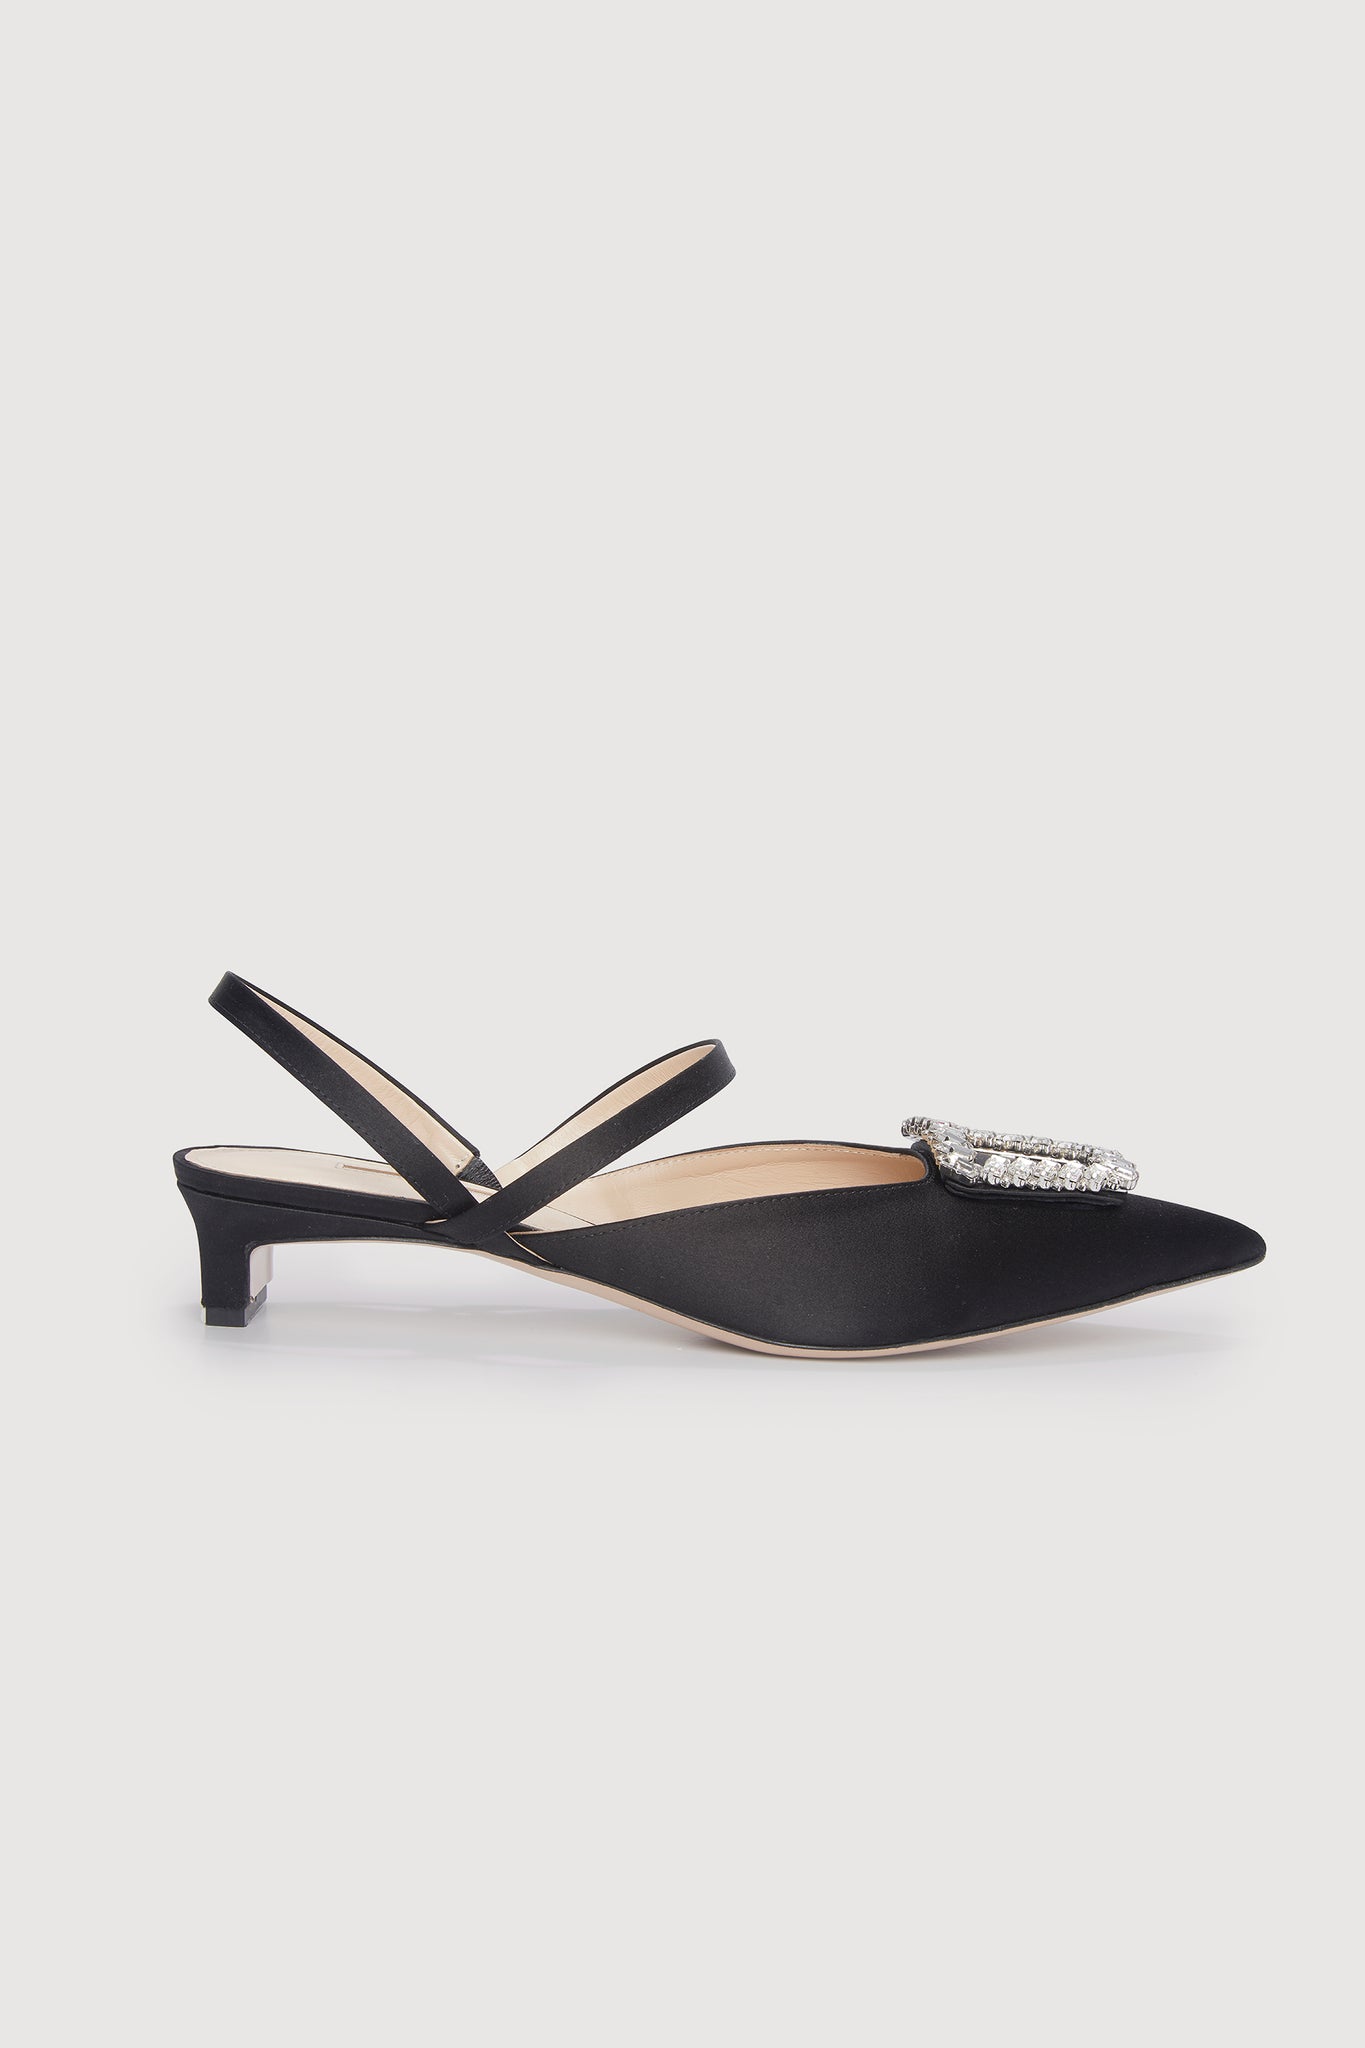 Katrina Black Satin Jewel Buckle Kitten Heel Shoes | Emilia Wickstead